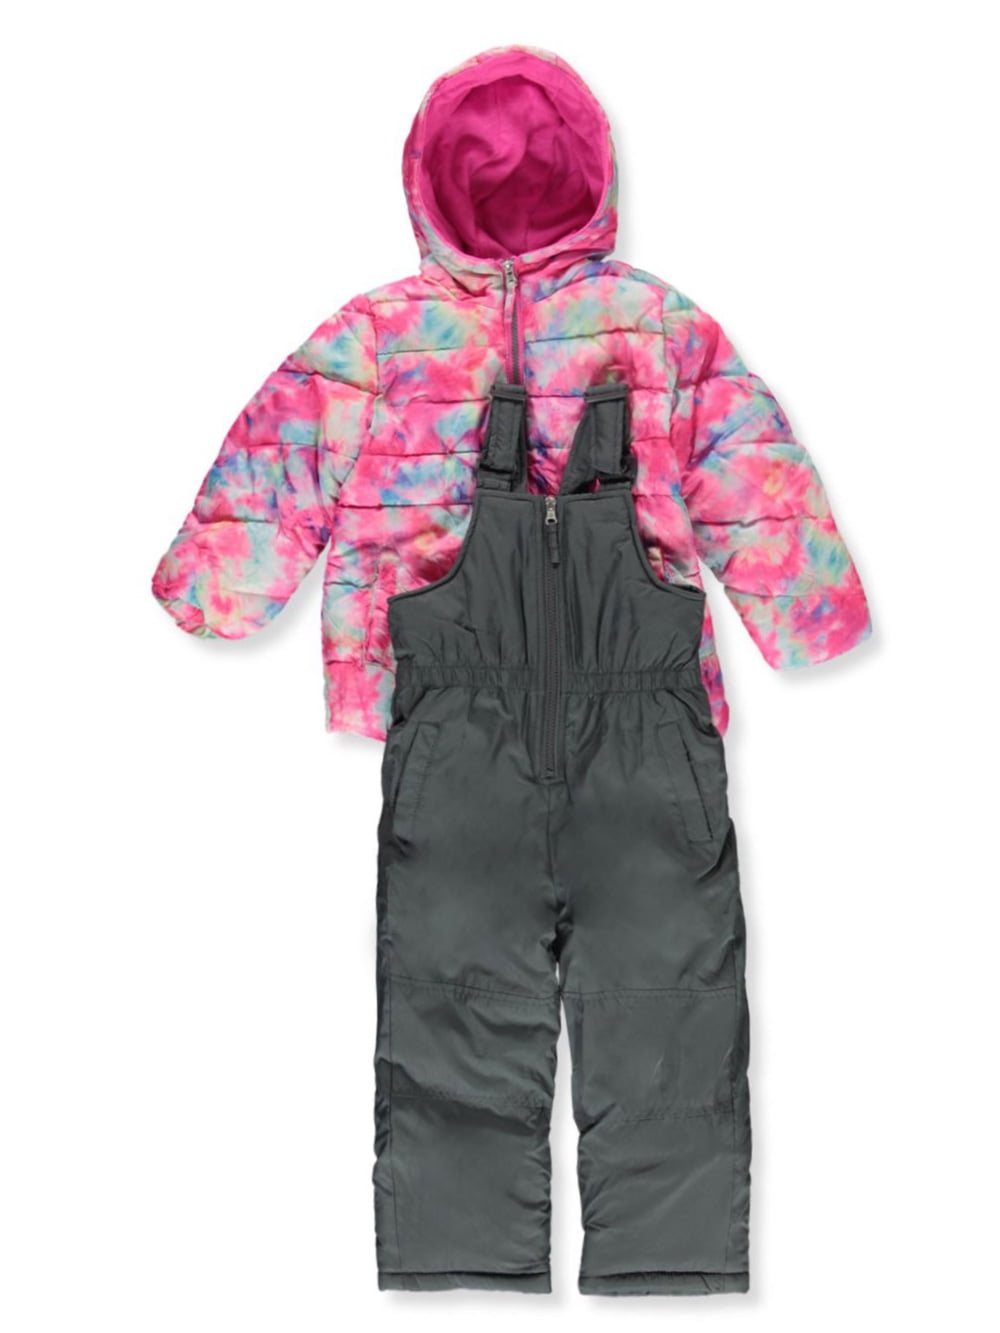 Pink Platinum Baby-Girls Insulated Two-Piece Snowsuit Snowsuit